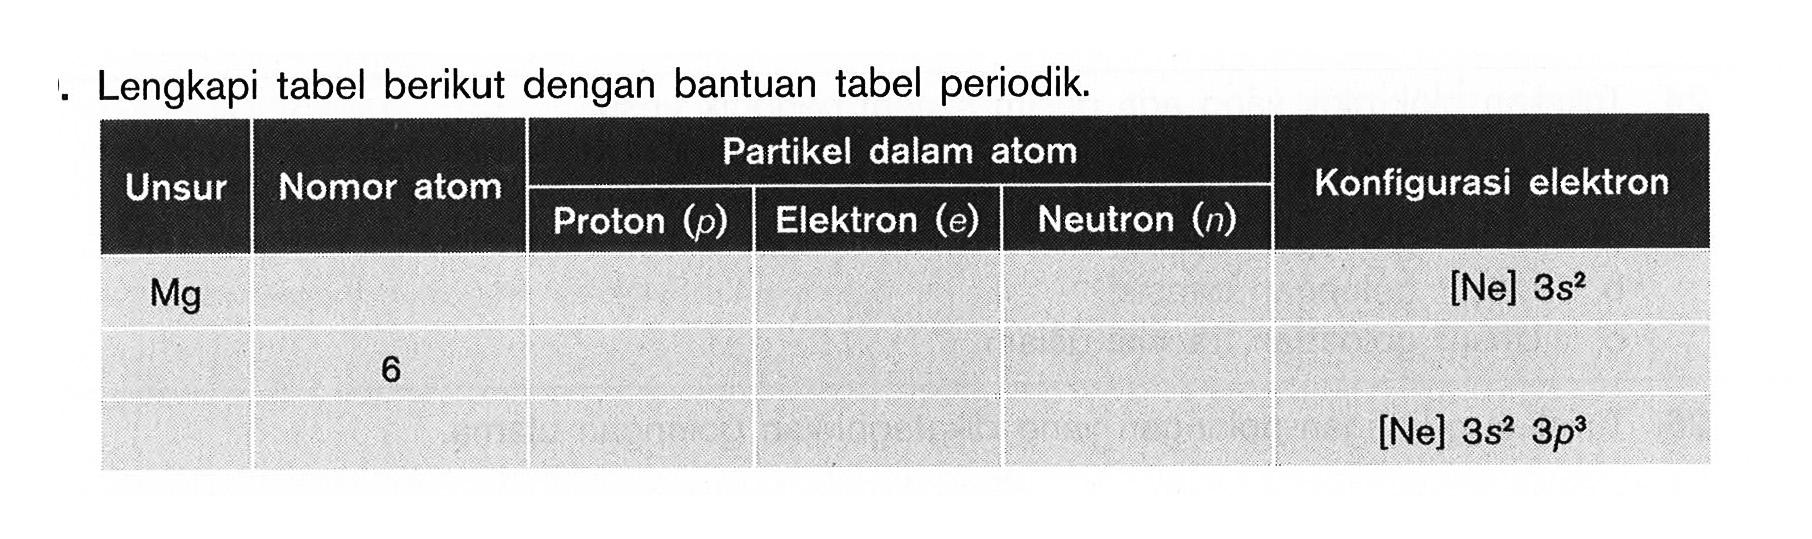 Lengkapi tabel berikut dengan bantuan tabel periodik. Unsur Nomor atom Partikel dalam atom Konfigurasi elektron Proton (p) Elektron (e) Neutron (n) Mg [Ne] 3s^2 6 [Ne] 3s^2 3p^3